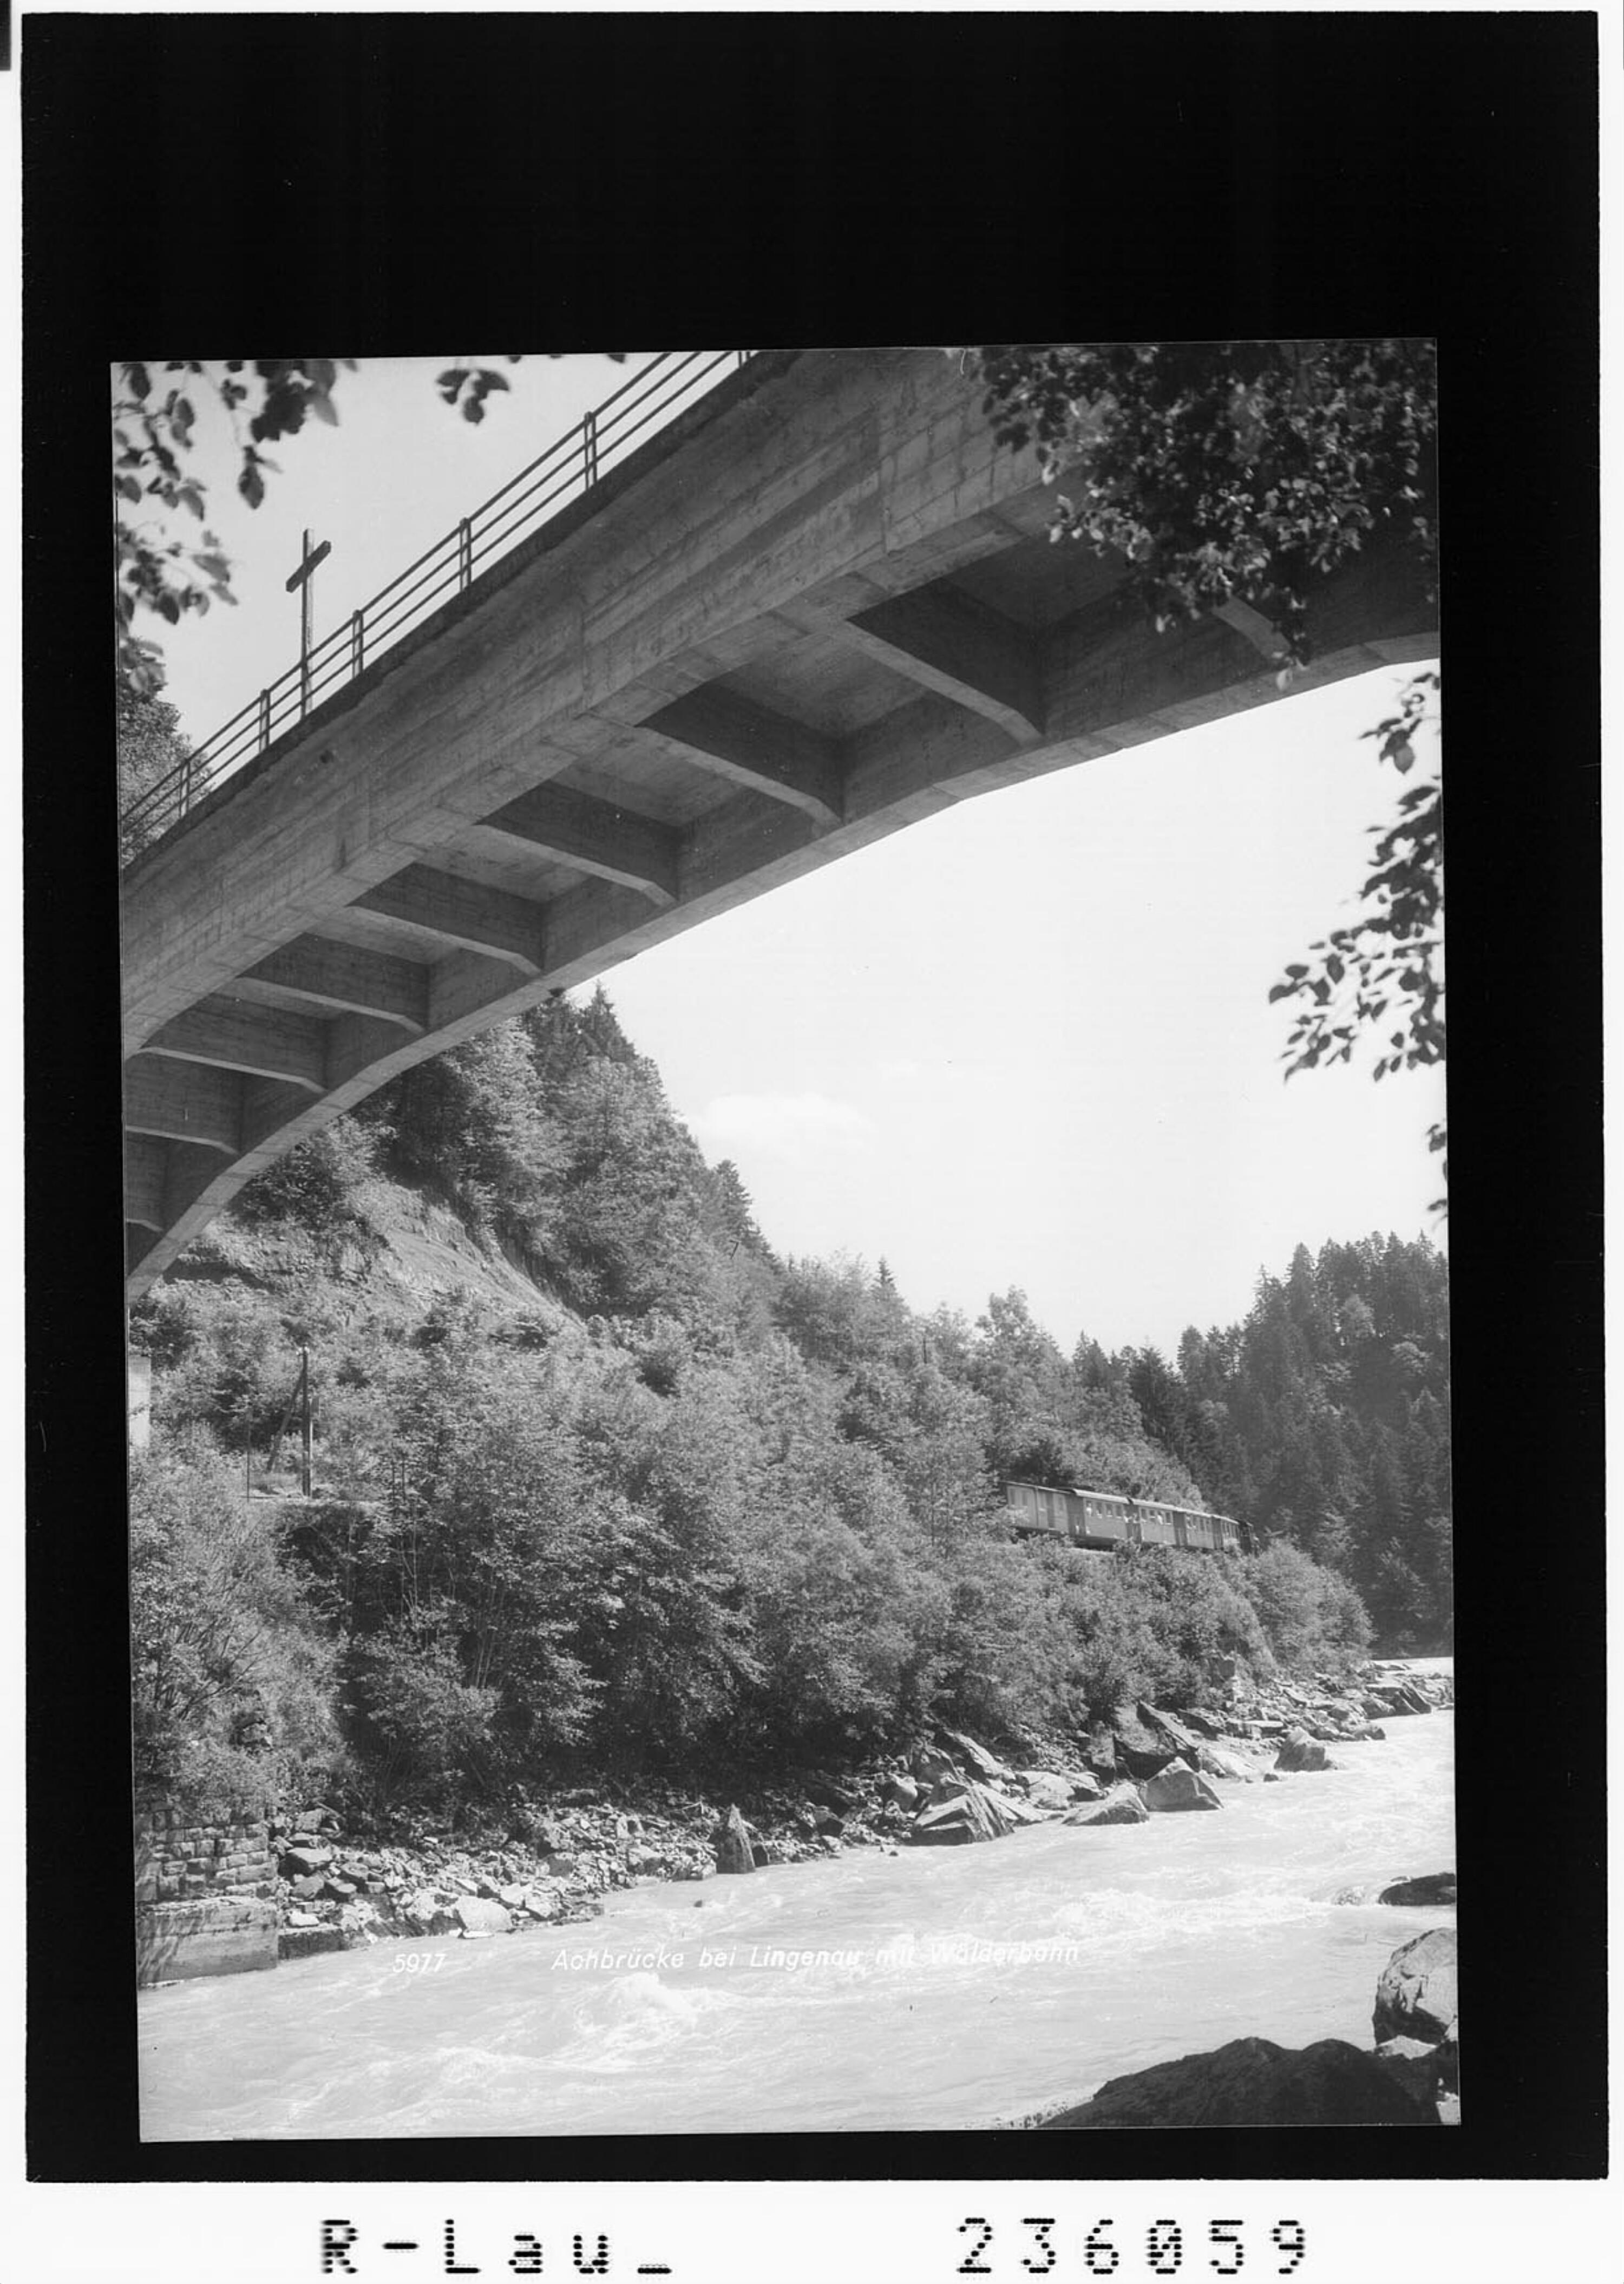 Achbrücke bei Lingenau mit Wälderbahn></div>


    <hr>
    <div class=